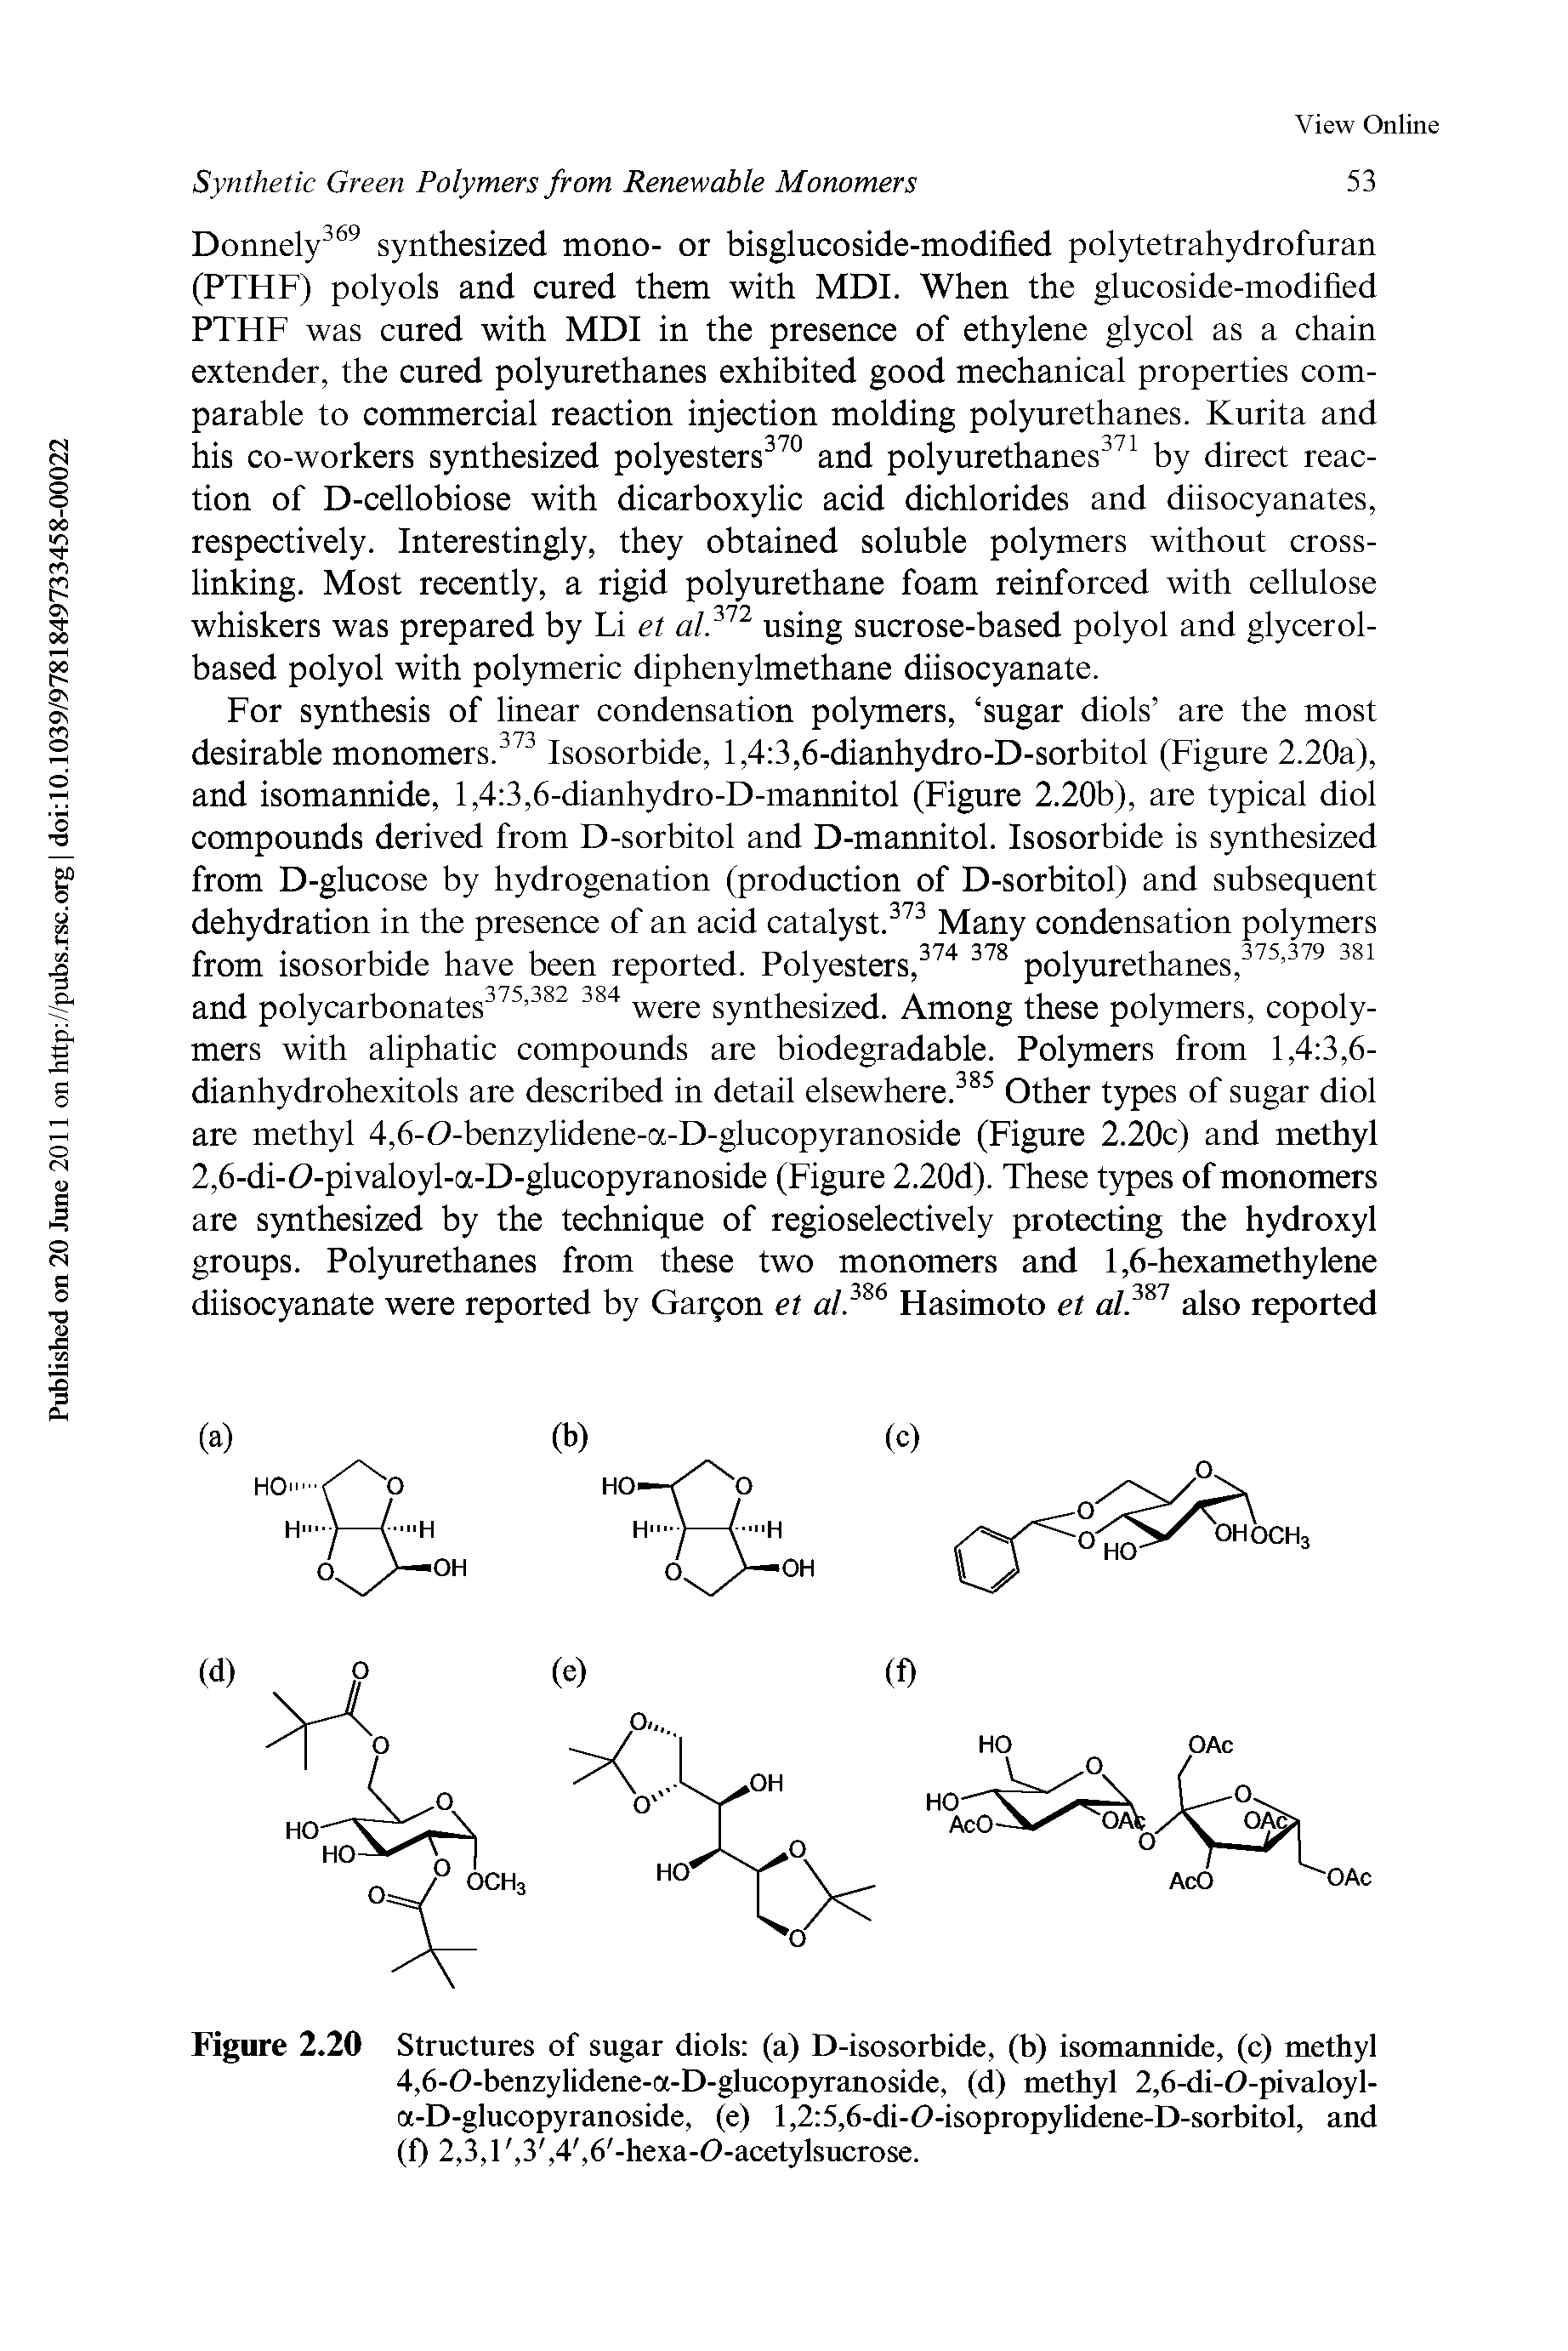 Figure 2.20 Structures of sugar diols (a) D-isosorbide, (b) isomannide, (c) methyl 4,6-0-benzylidene-a-D-glucop5Tanoside, (d) methyl 2,6-di-O-pivaloyl-a-D-glucopyranoside, (e) l,2 5,6-di-0-isopropylidene-D-sorbitol, and (0 2,3,1, 3, 4, 6 -hexa-0-acetylsucrose.